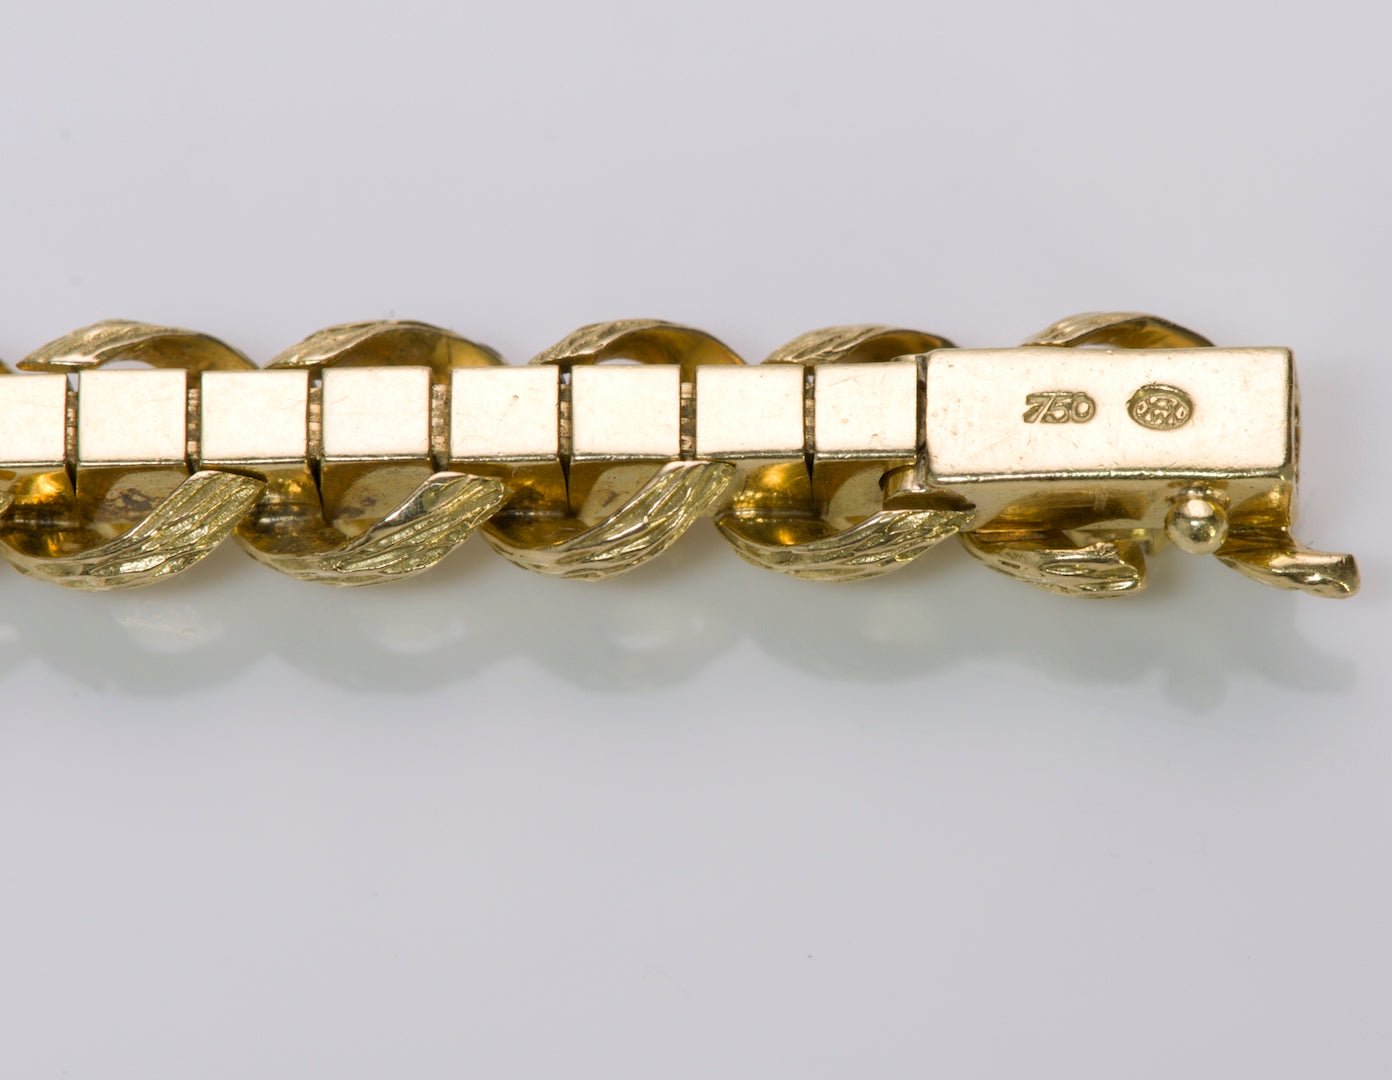 Atelier Munsteiner 18K Yellow Gold Diamond Bracelet - DSF Antique Jewelry